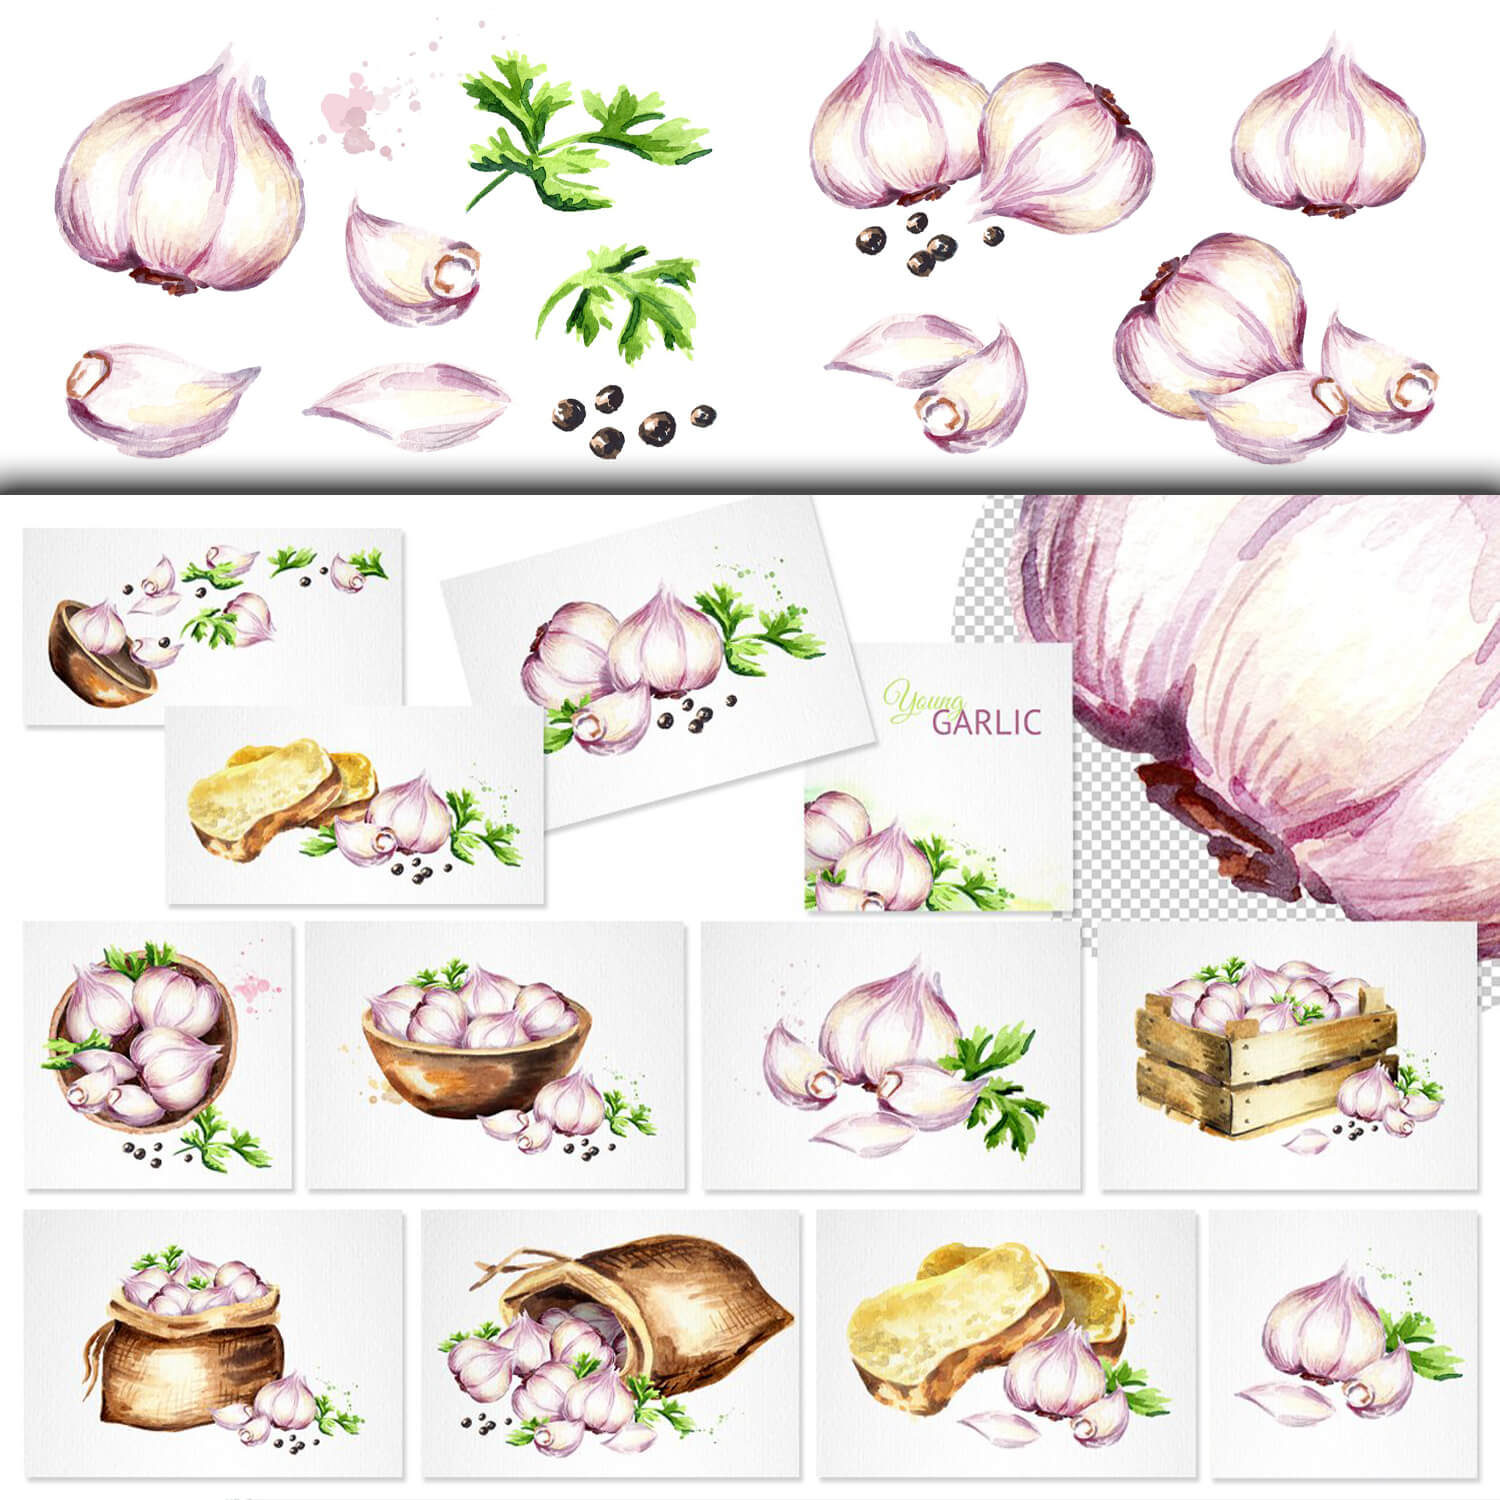 Image of garlic in a bag.